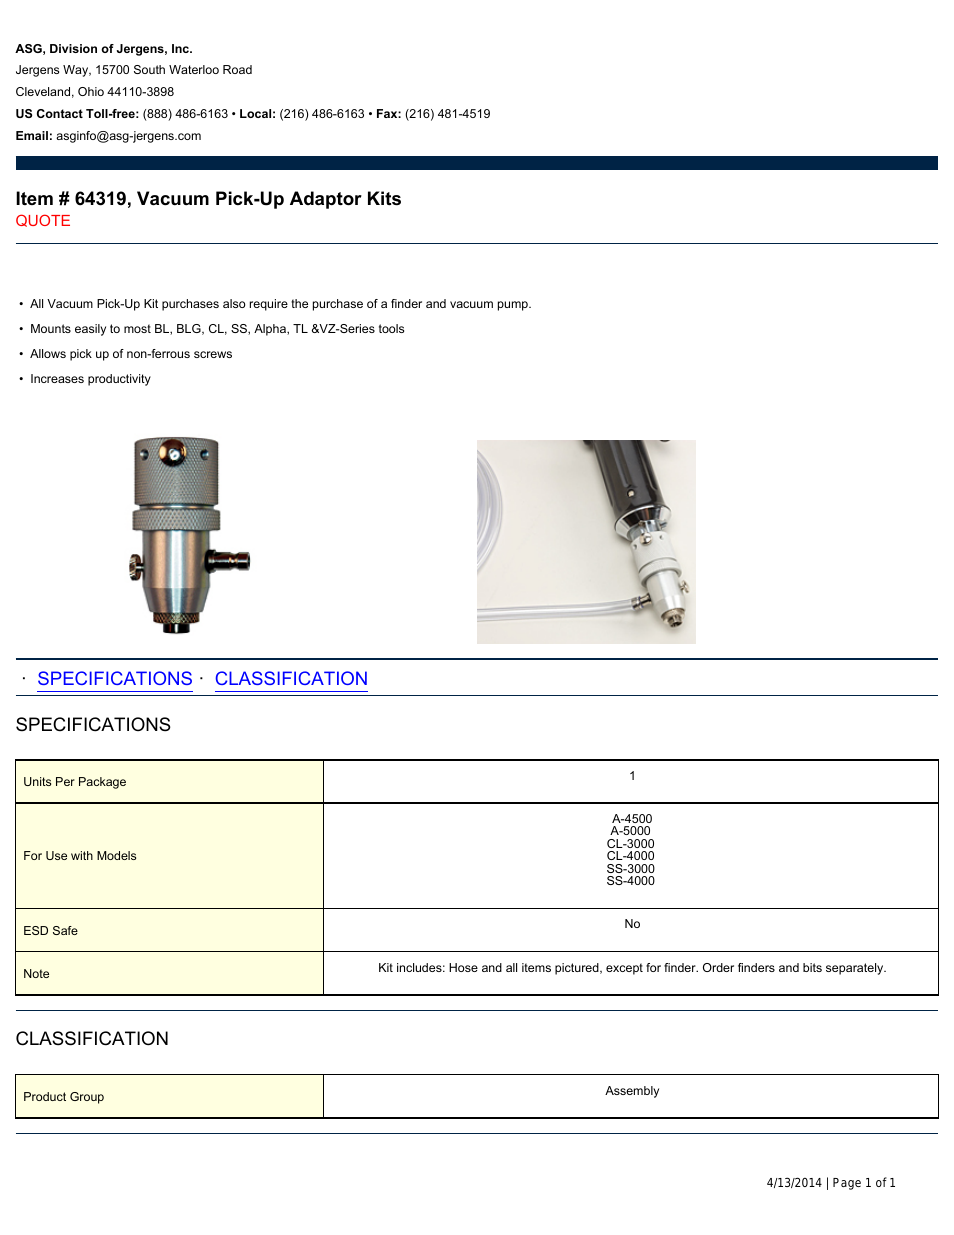 64319 Vacuum Pick-Up Adaptor Kits